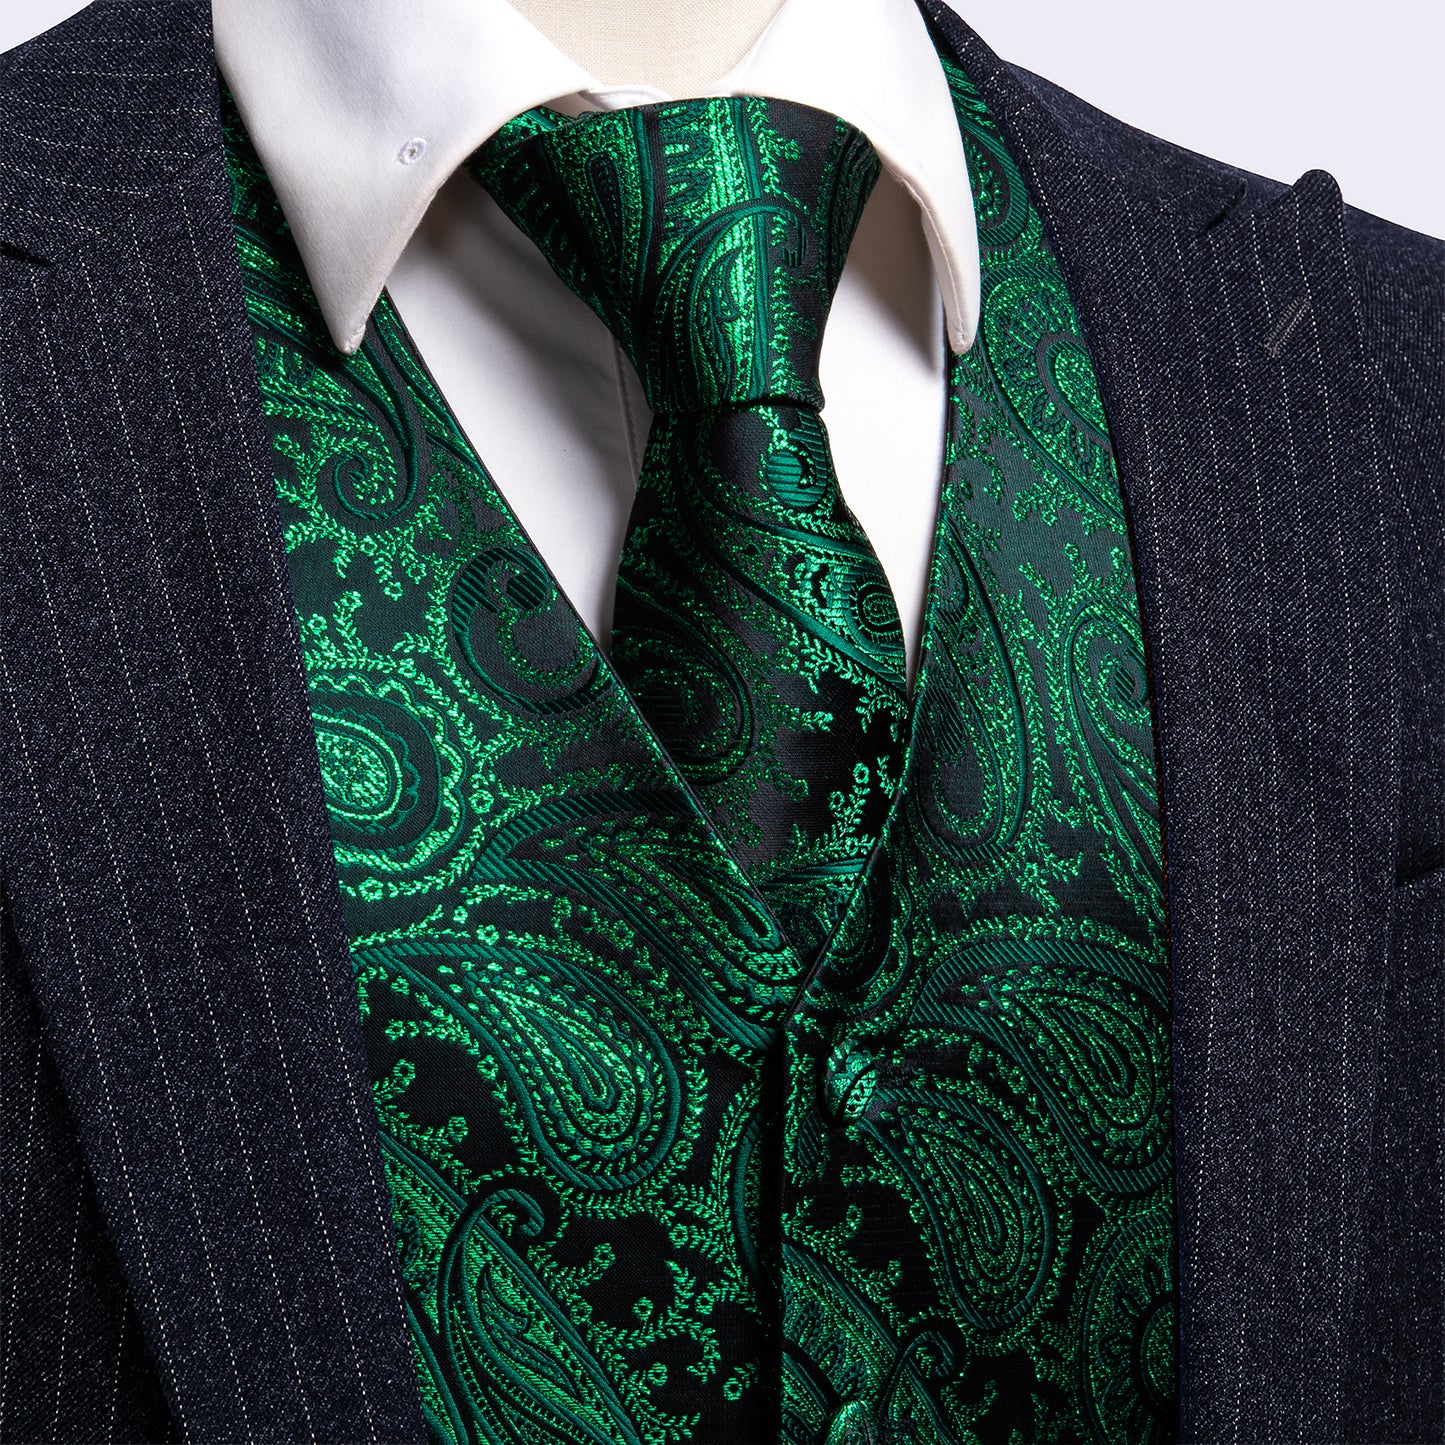 Designer Paisley Waistcoat Silky Novelty Vest Whales Forest Green